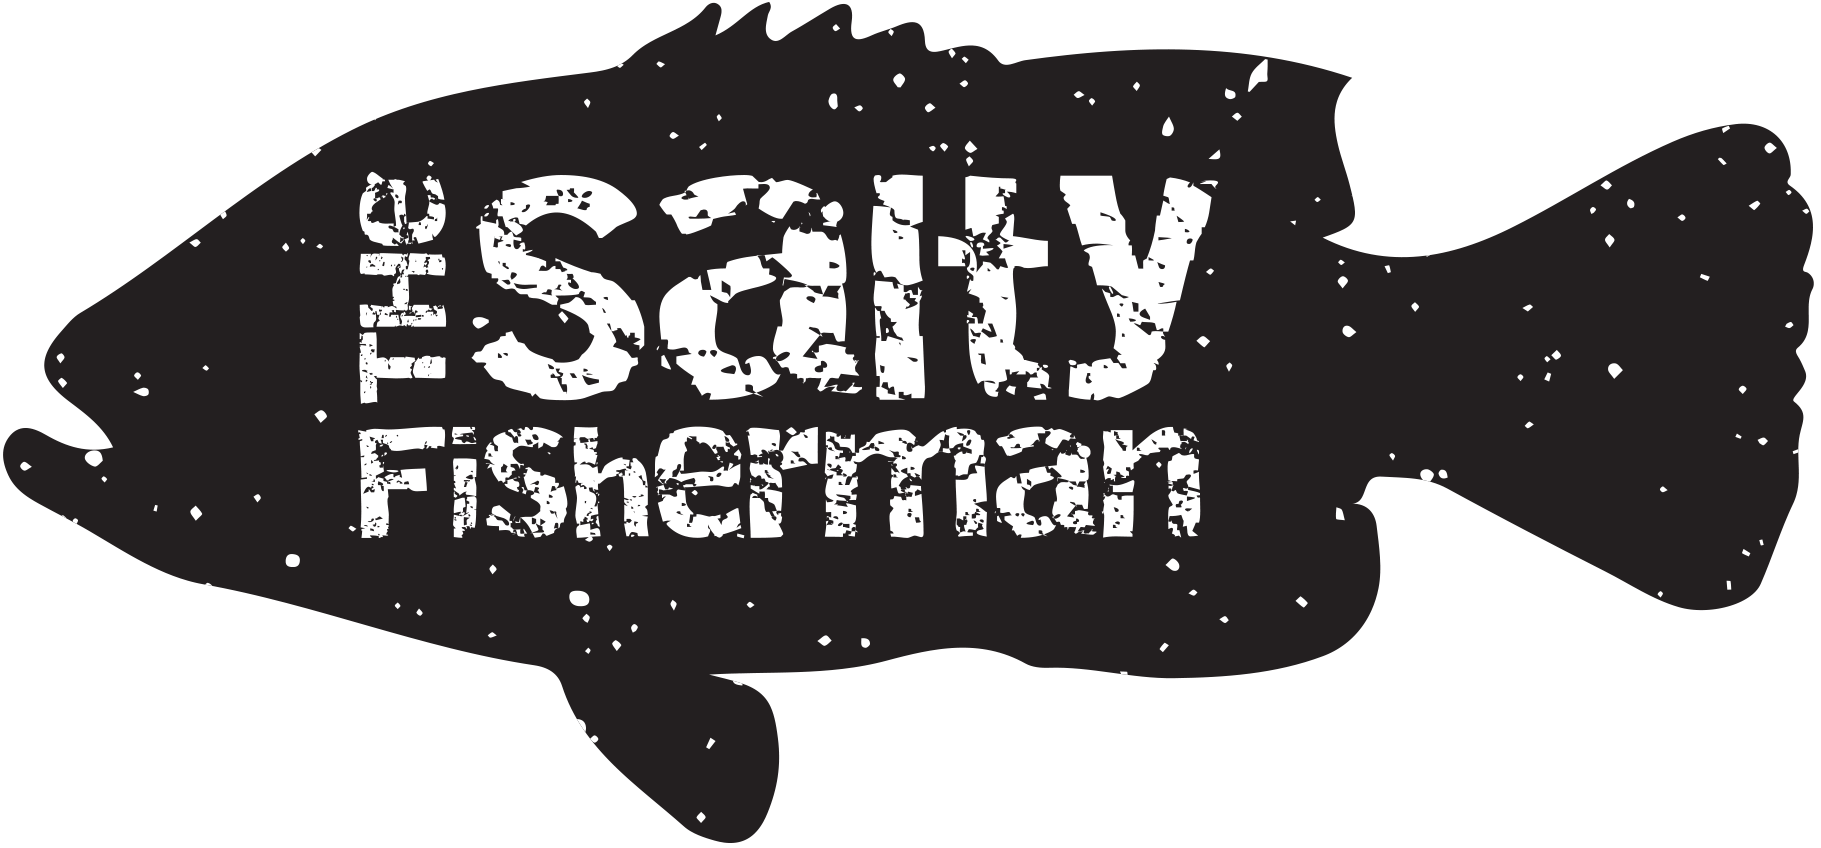 the salty fisherman